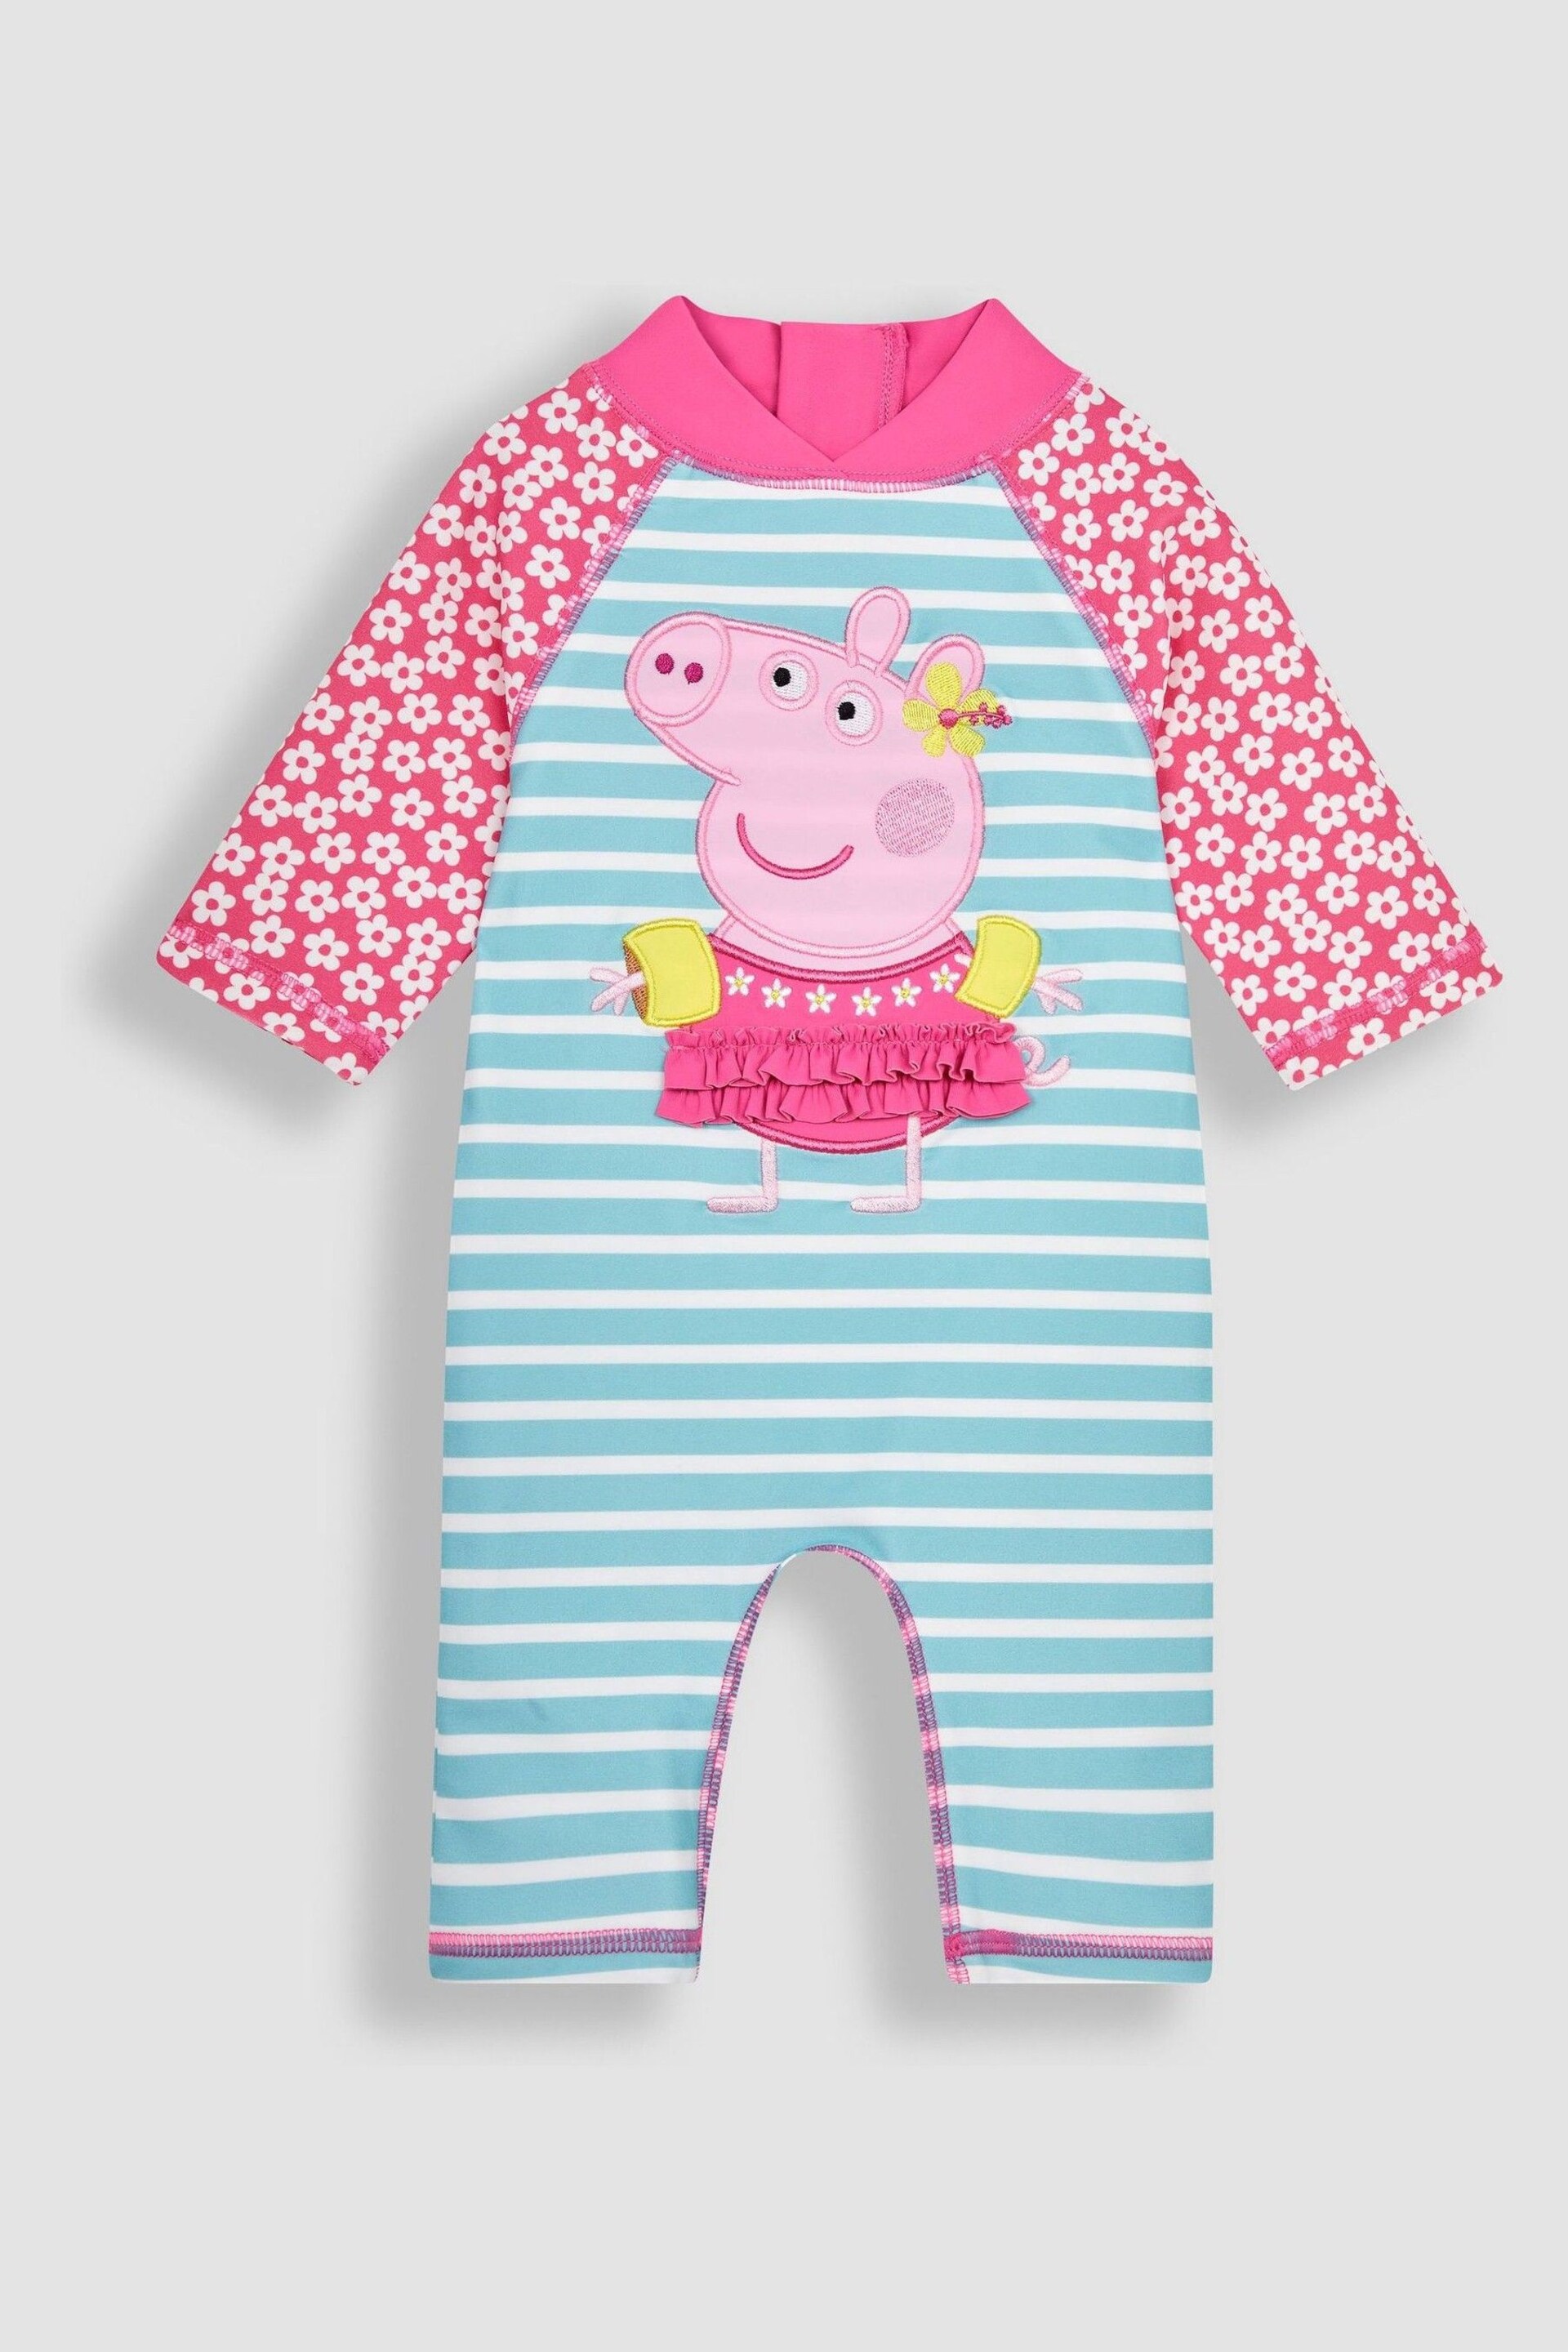 JoJo Maman Bébé Pink Peppa Pig UPF 50 1-Piece Sun Protection Suit - Image 3 of 6